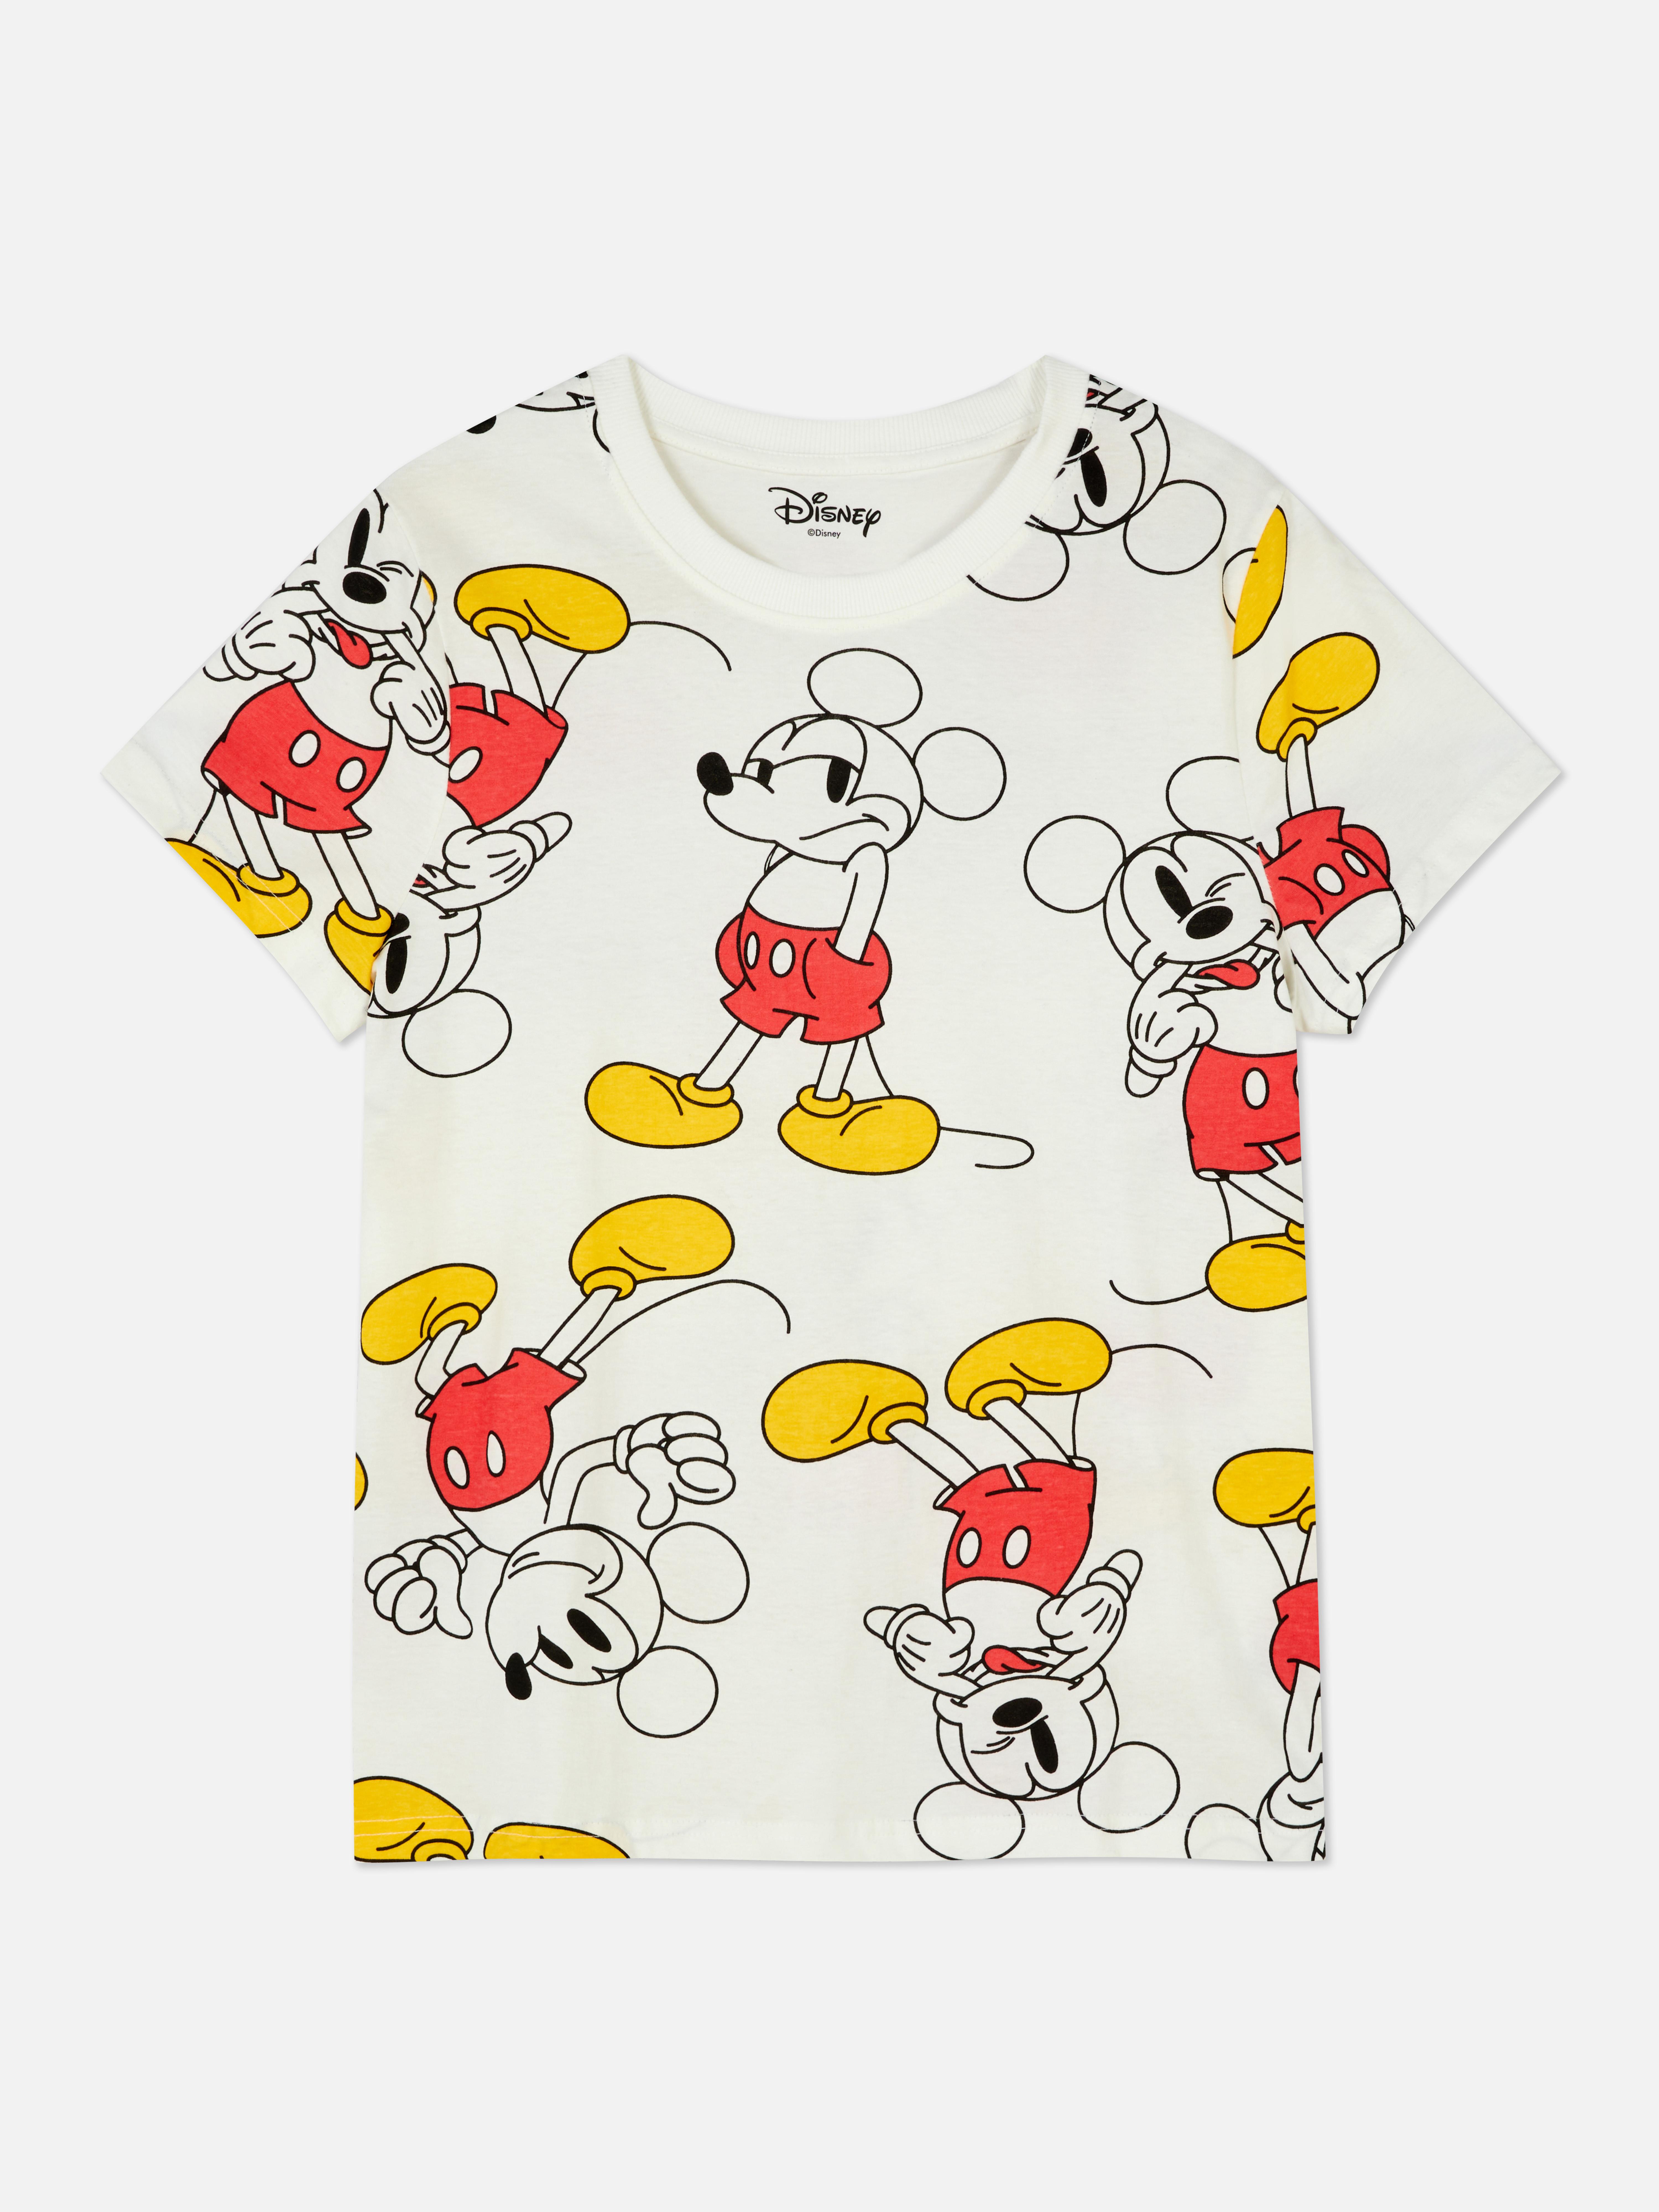 Disney's Mickey Mouse T-shirt